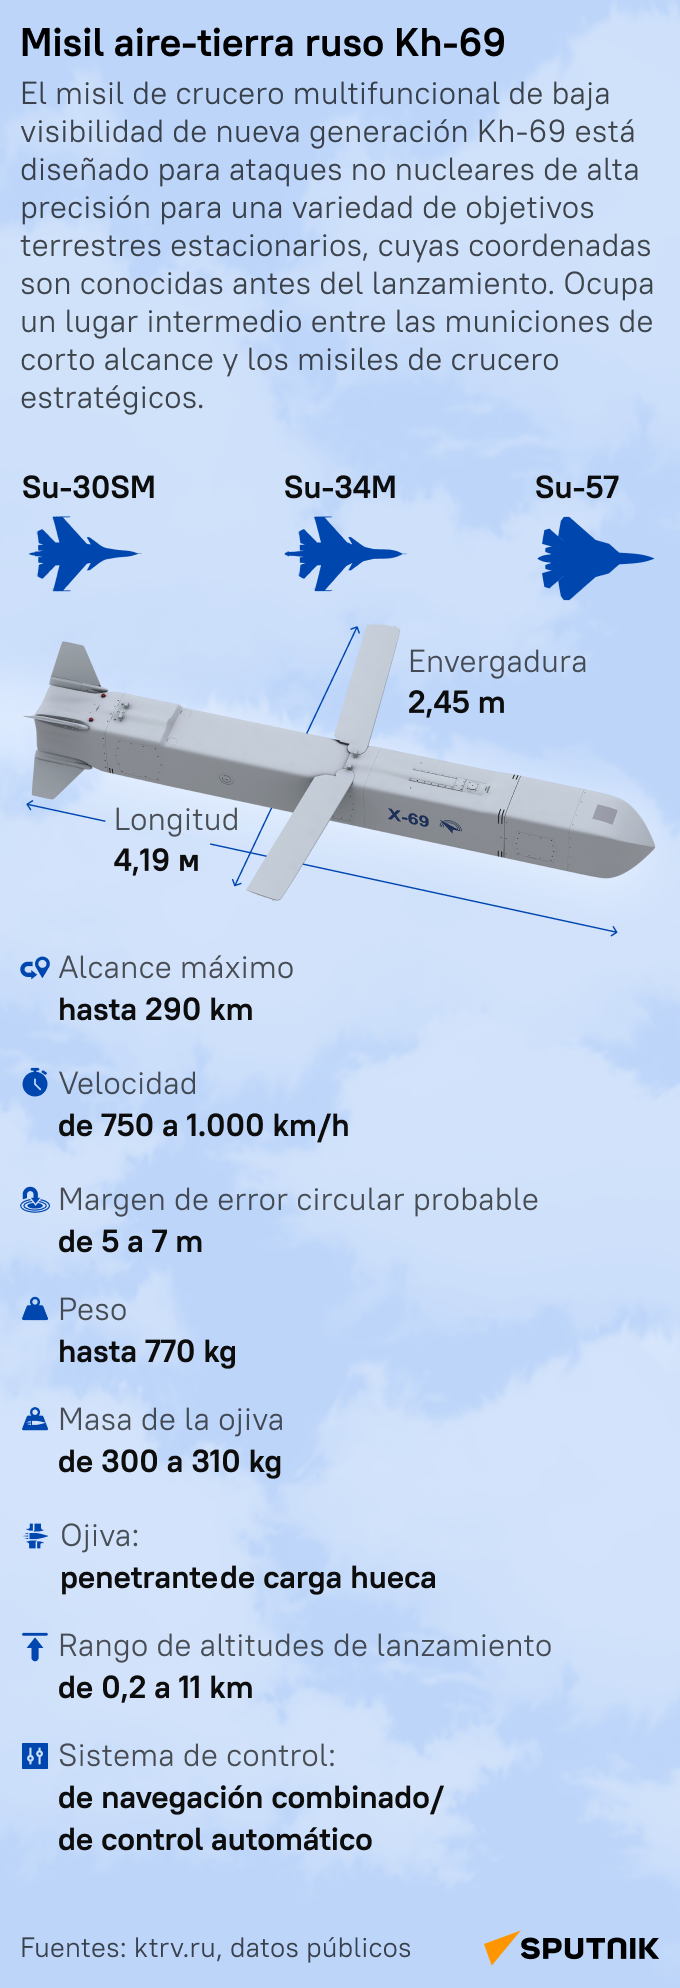 El misil aire-tierra ruso Kh-69 - Sputnik Mundo